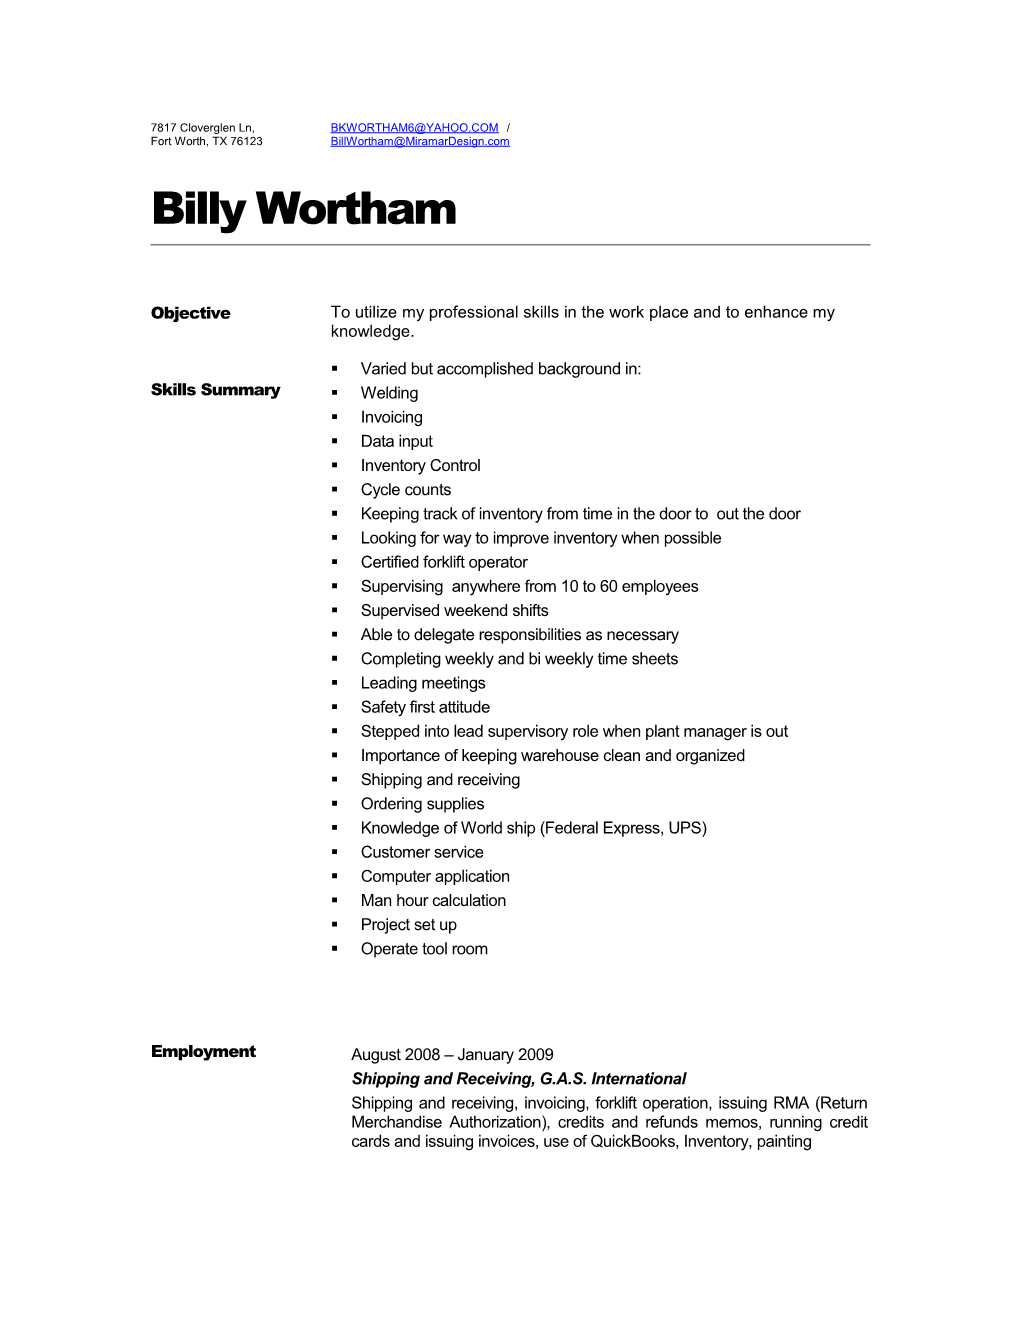 Billy Wortham